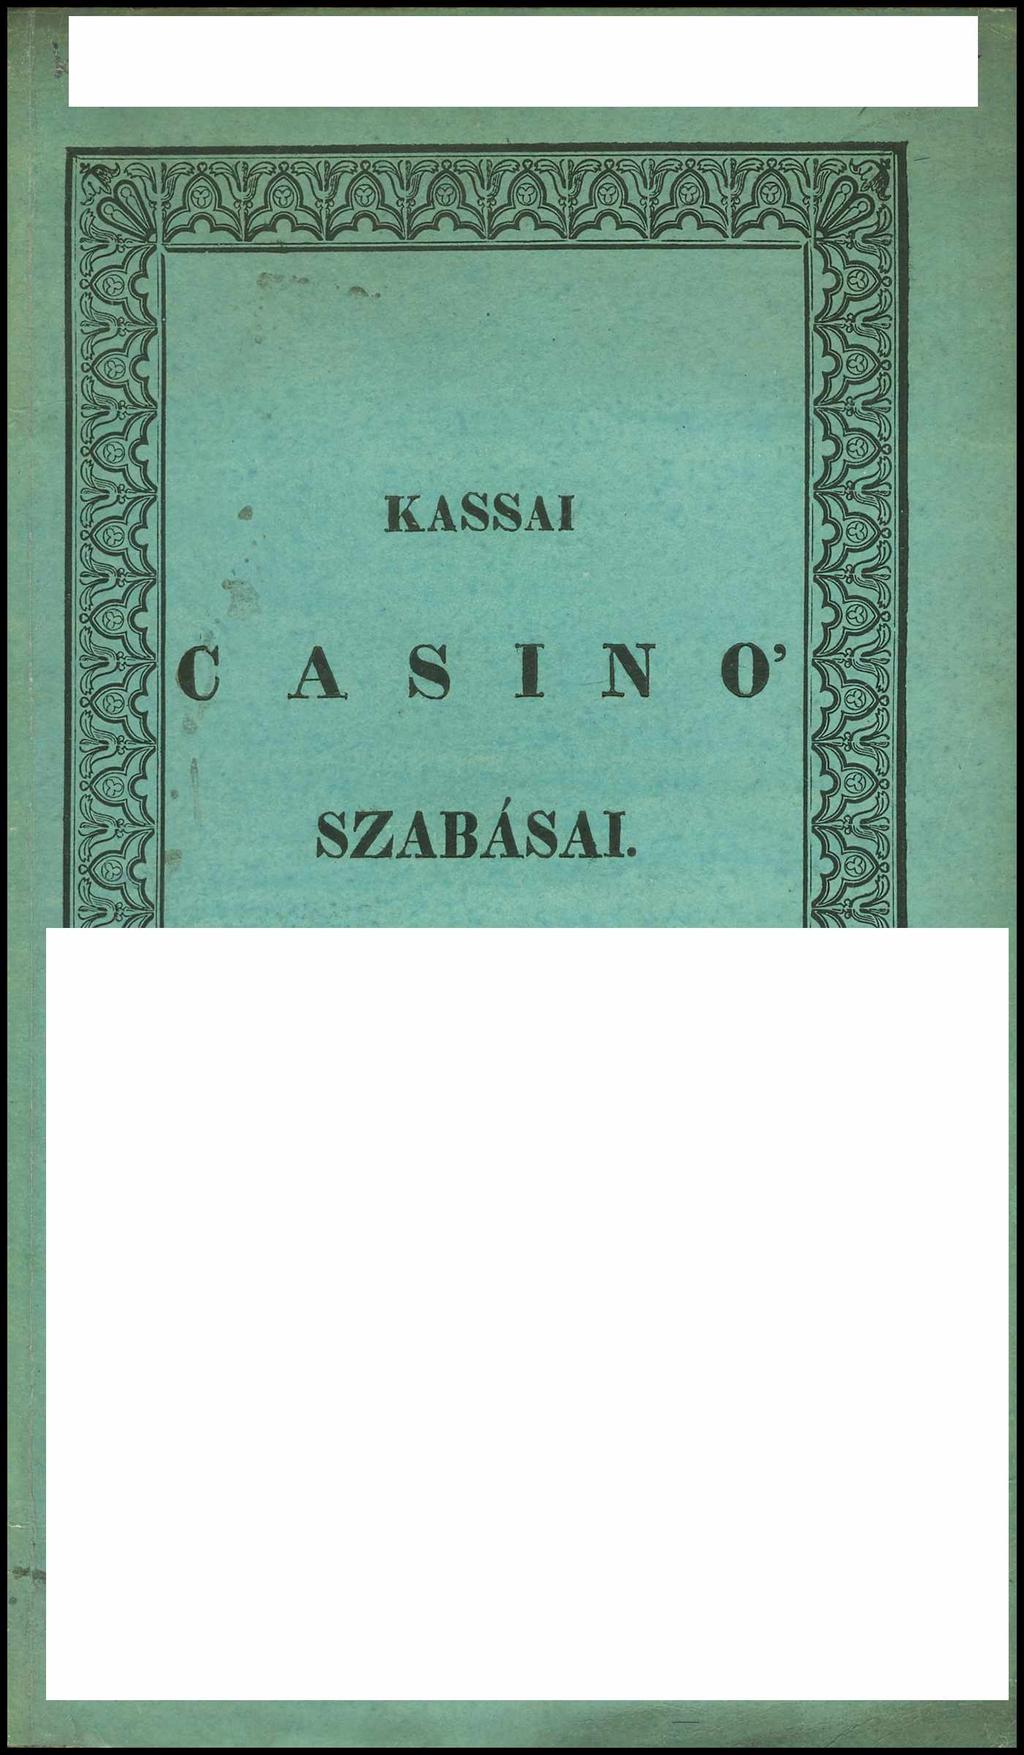 KASSAI C